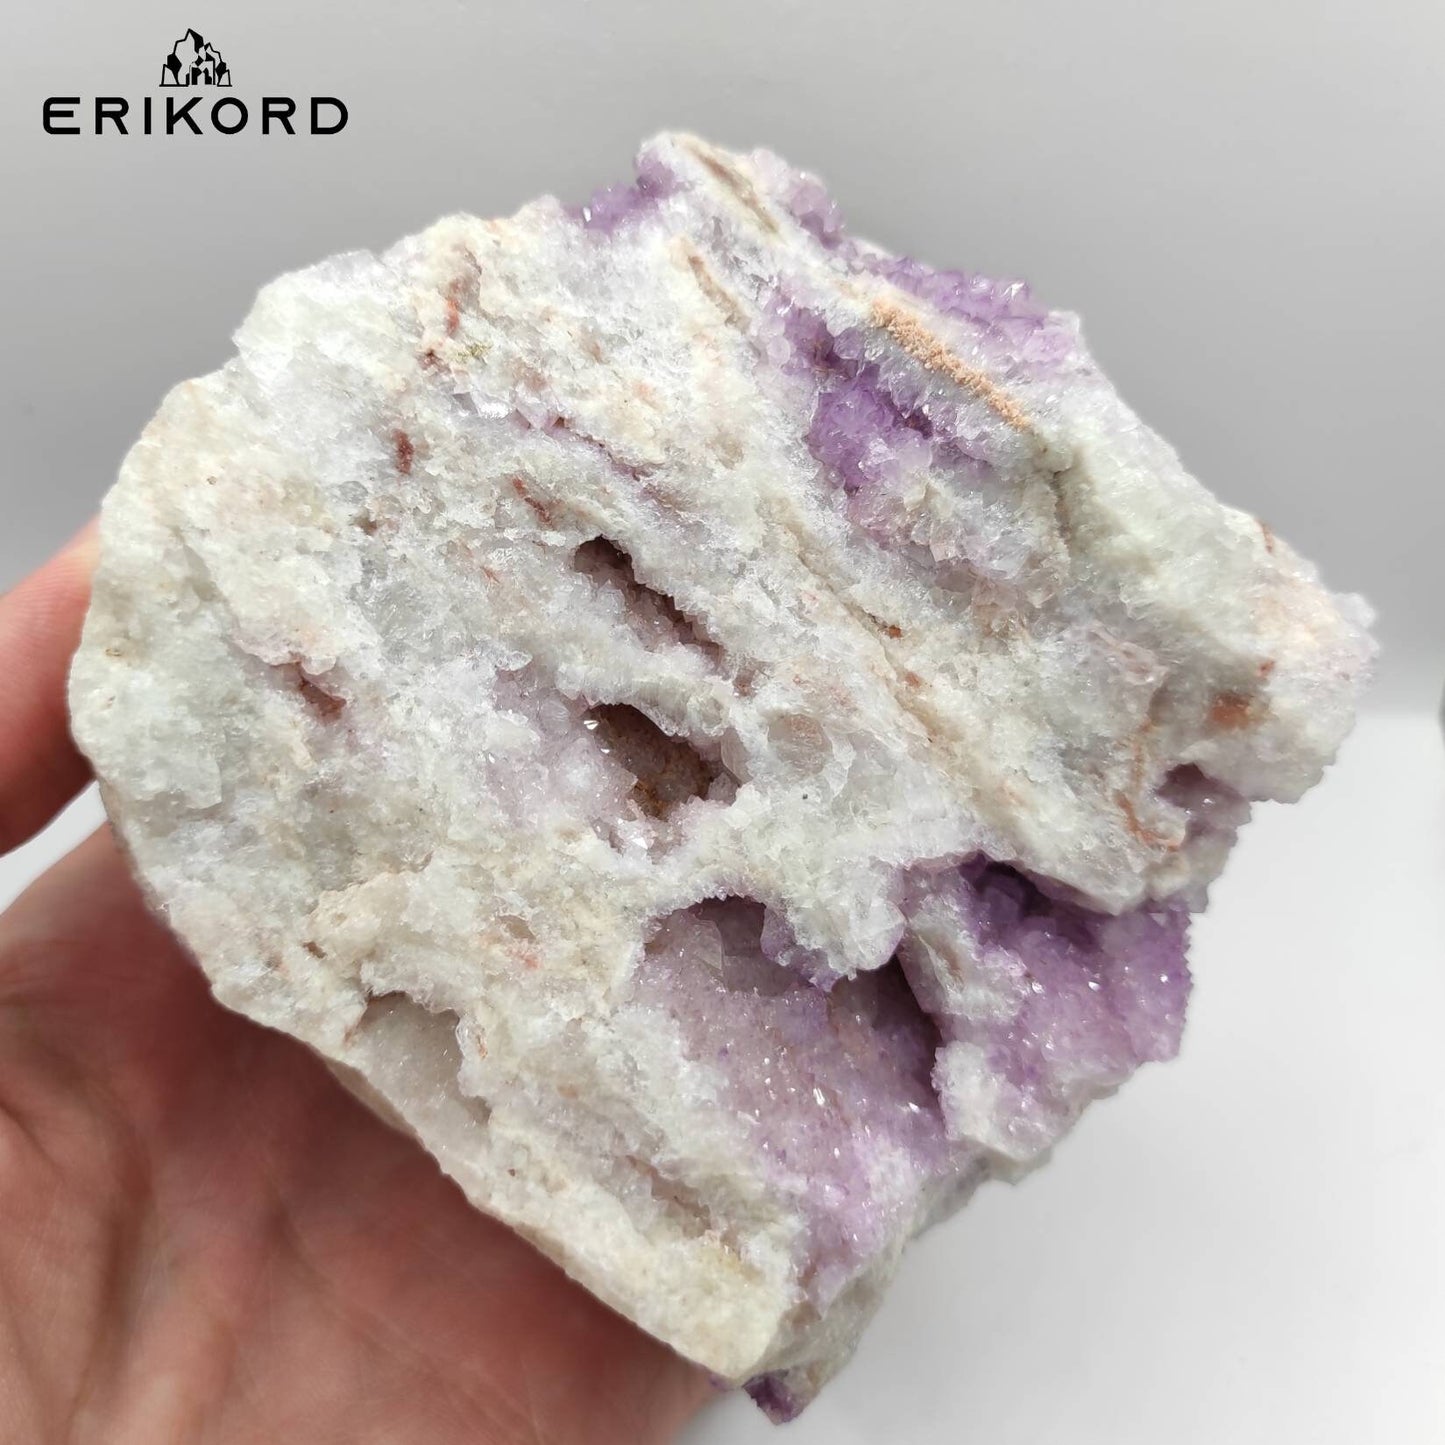 691g Thunder Bay Amethyst Crystal - Natural Amethyst Mineral Specimen - Ontario Canada - Spirit Quartz Style Amethyst - Raw Ethical Crystals